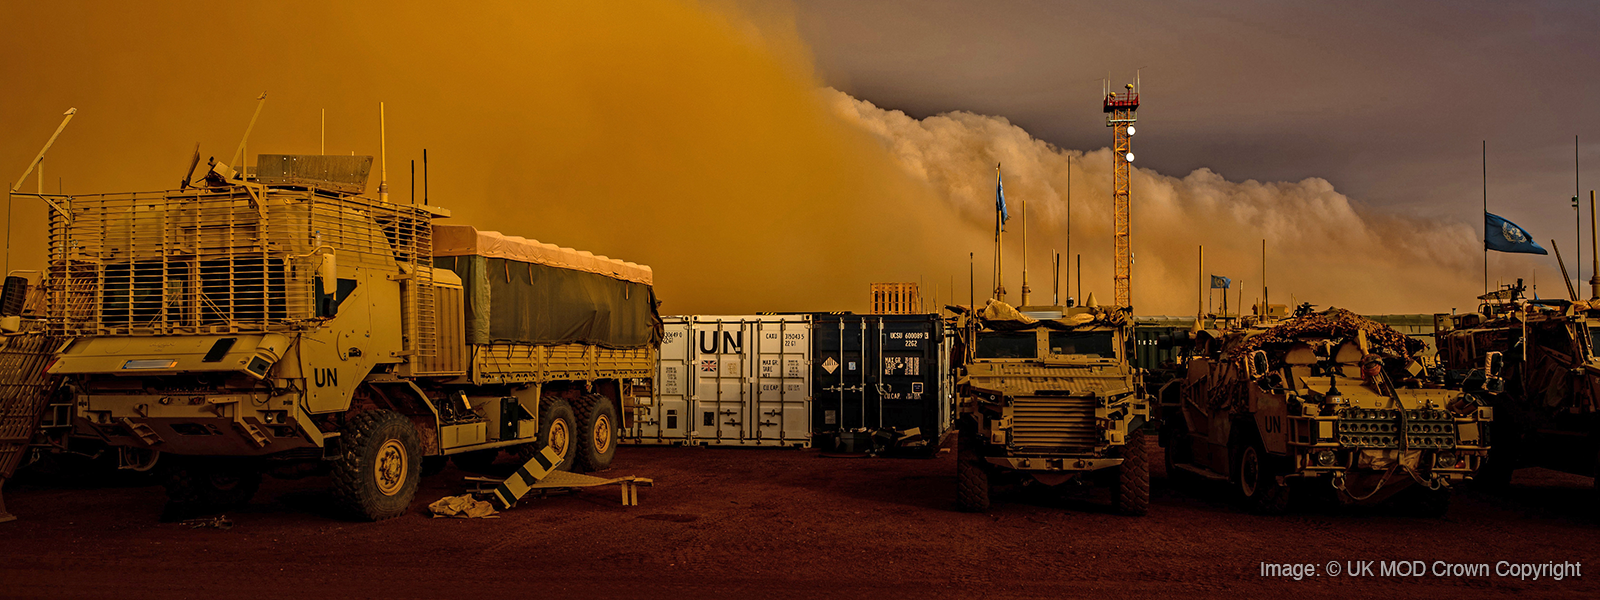 Military vehicles in the desert